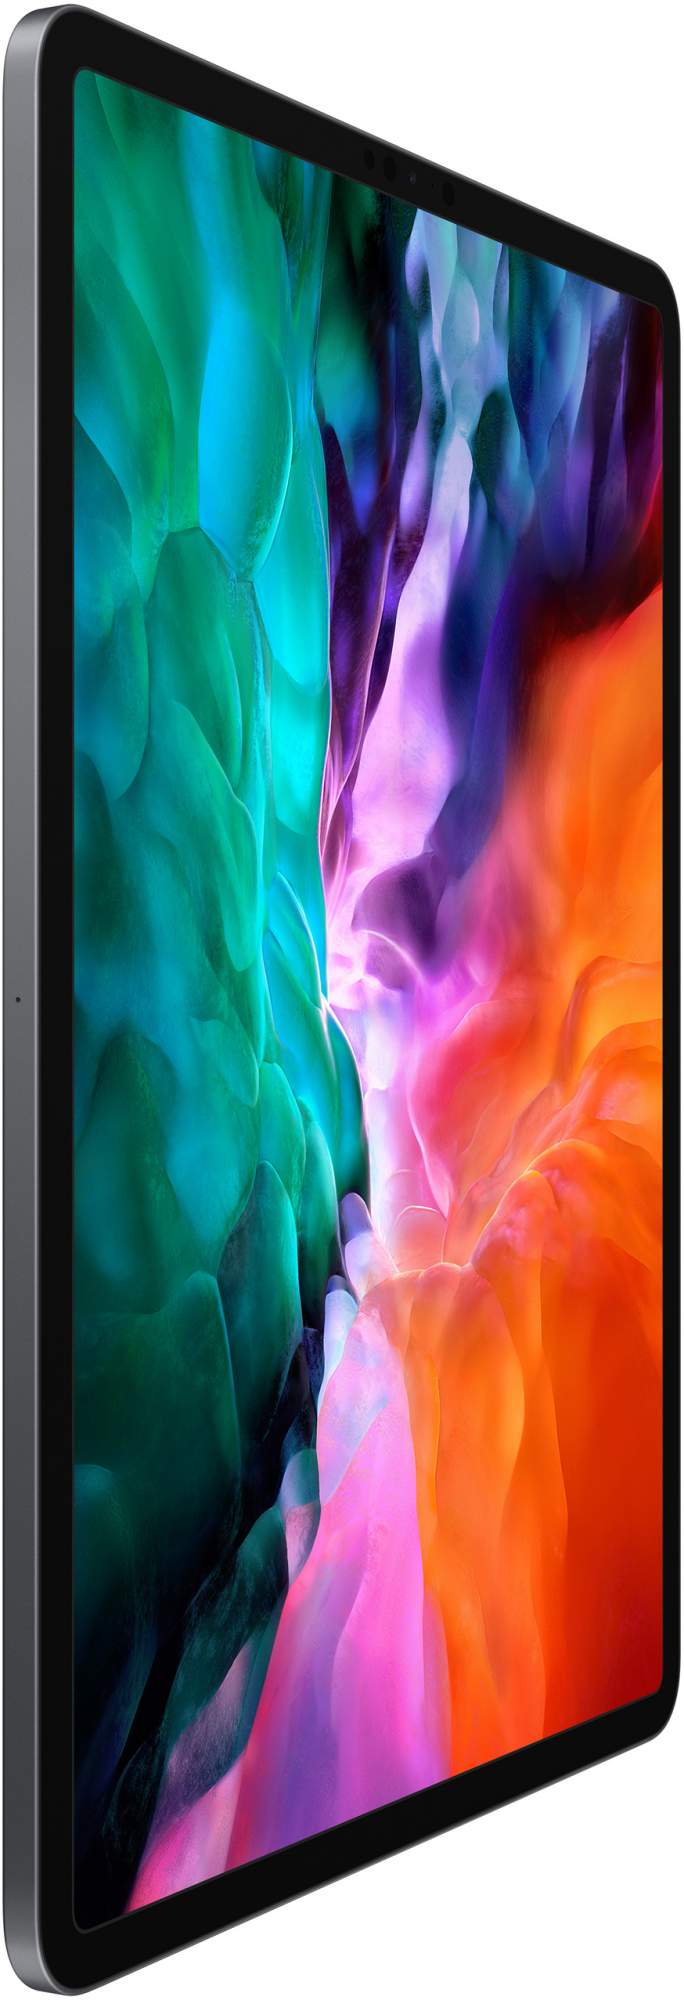 Планшет Apple iPad Pro 12.9 (2020) 1TB Wi-Fi Space Grey (MXAX2RU/A)